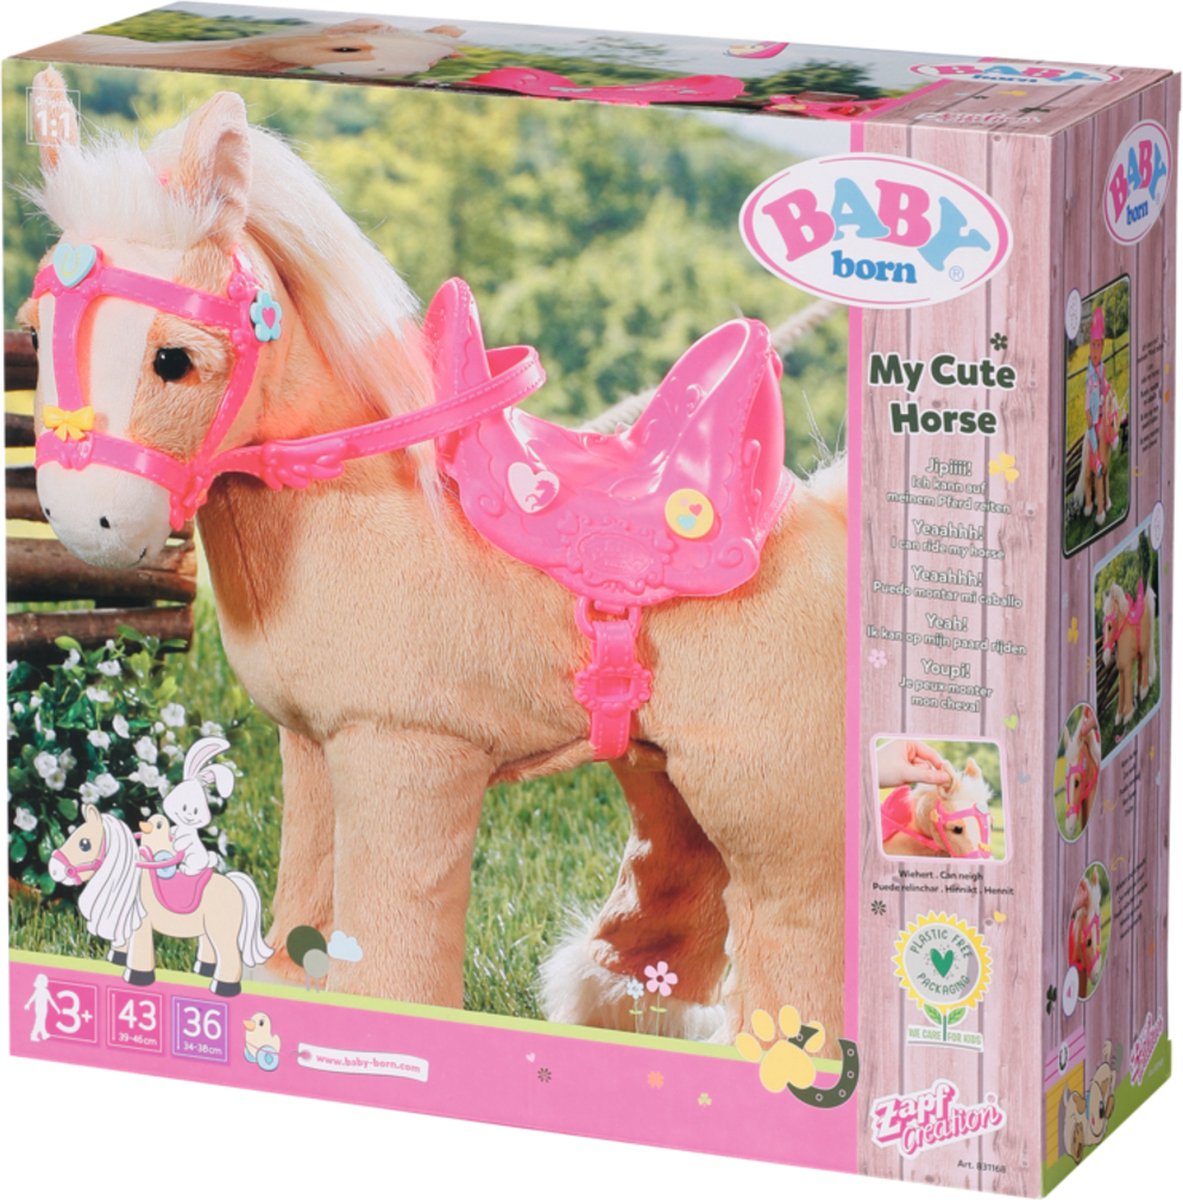 BABY born Mijn Schattige Paard - Poppenknuffel | bol.com